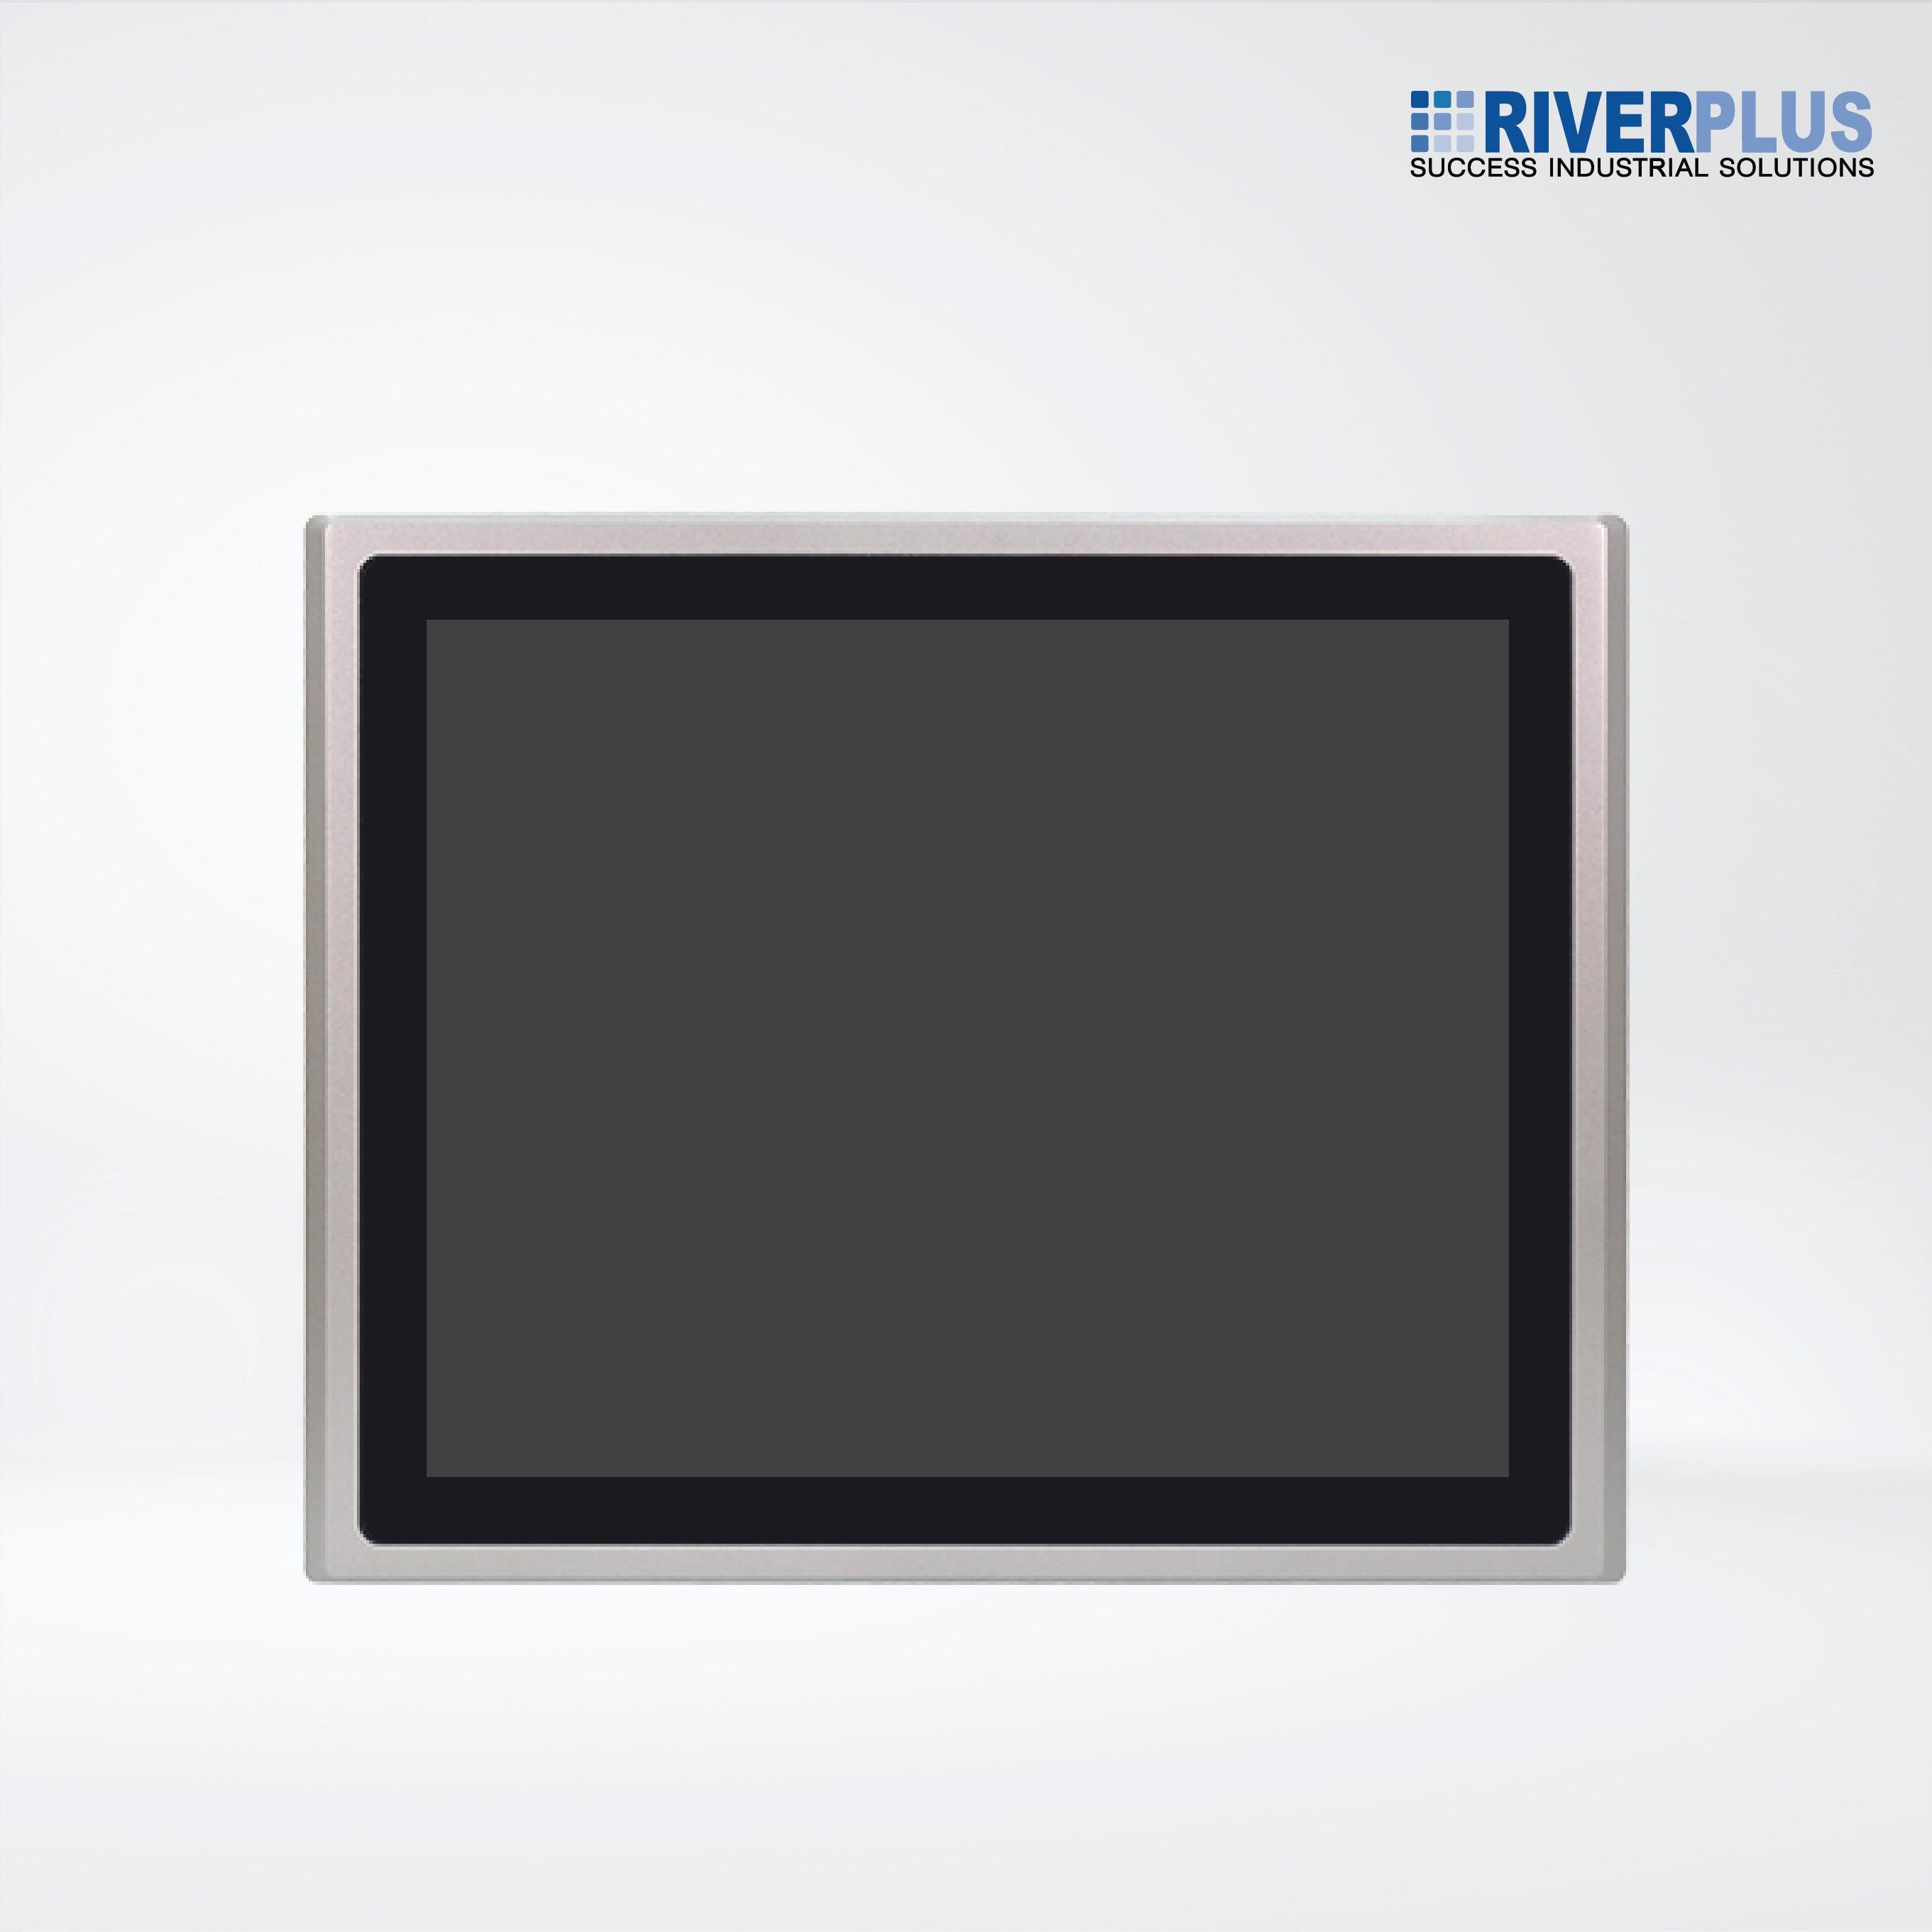 ARCHMI-819PH 19" Intel Celeron N2930/ Atom E3845, Fanless Industrial Compact Size Panel PC - Riverplus